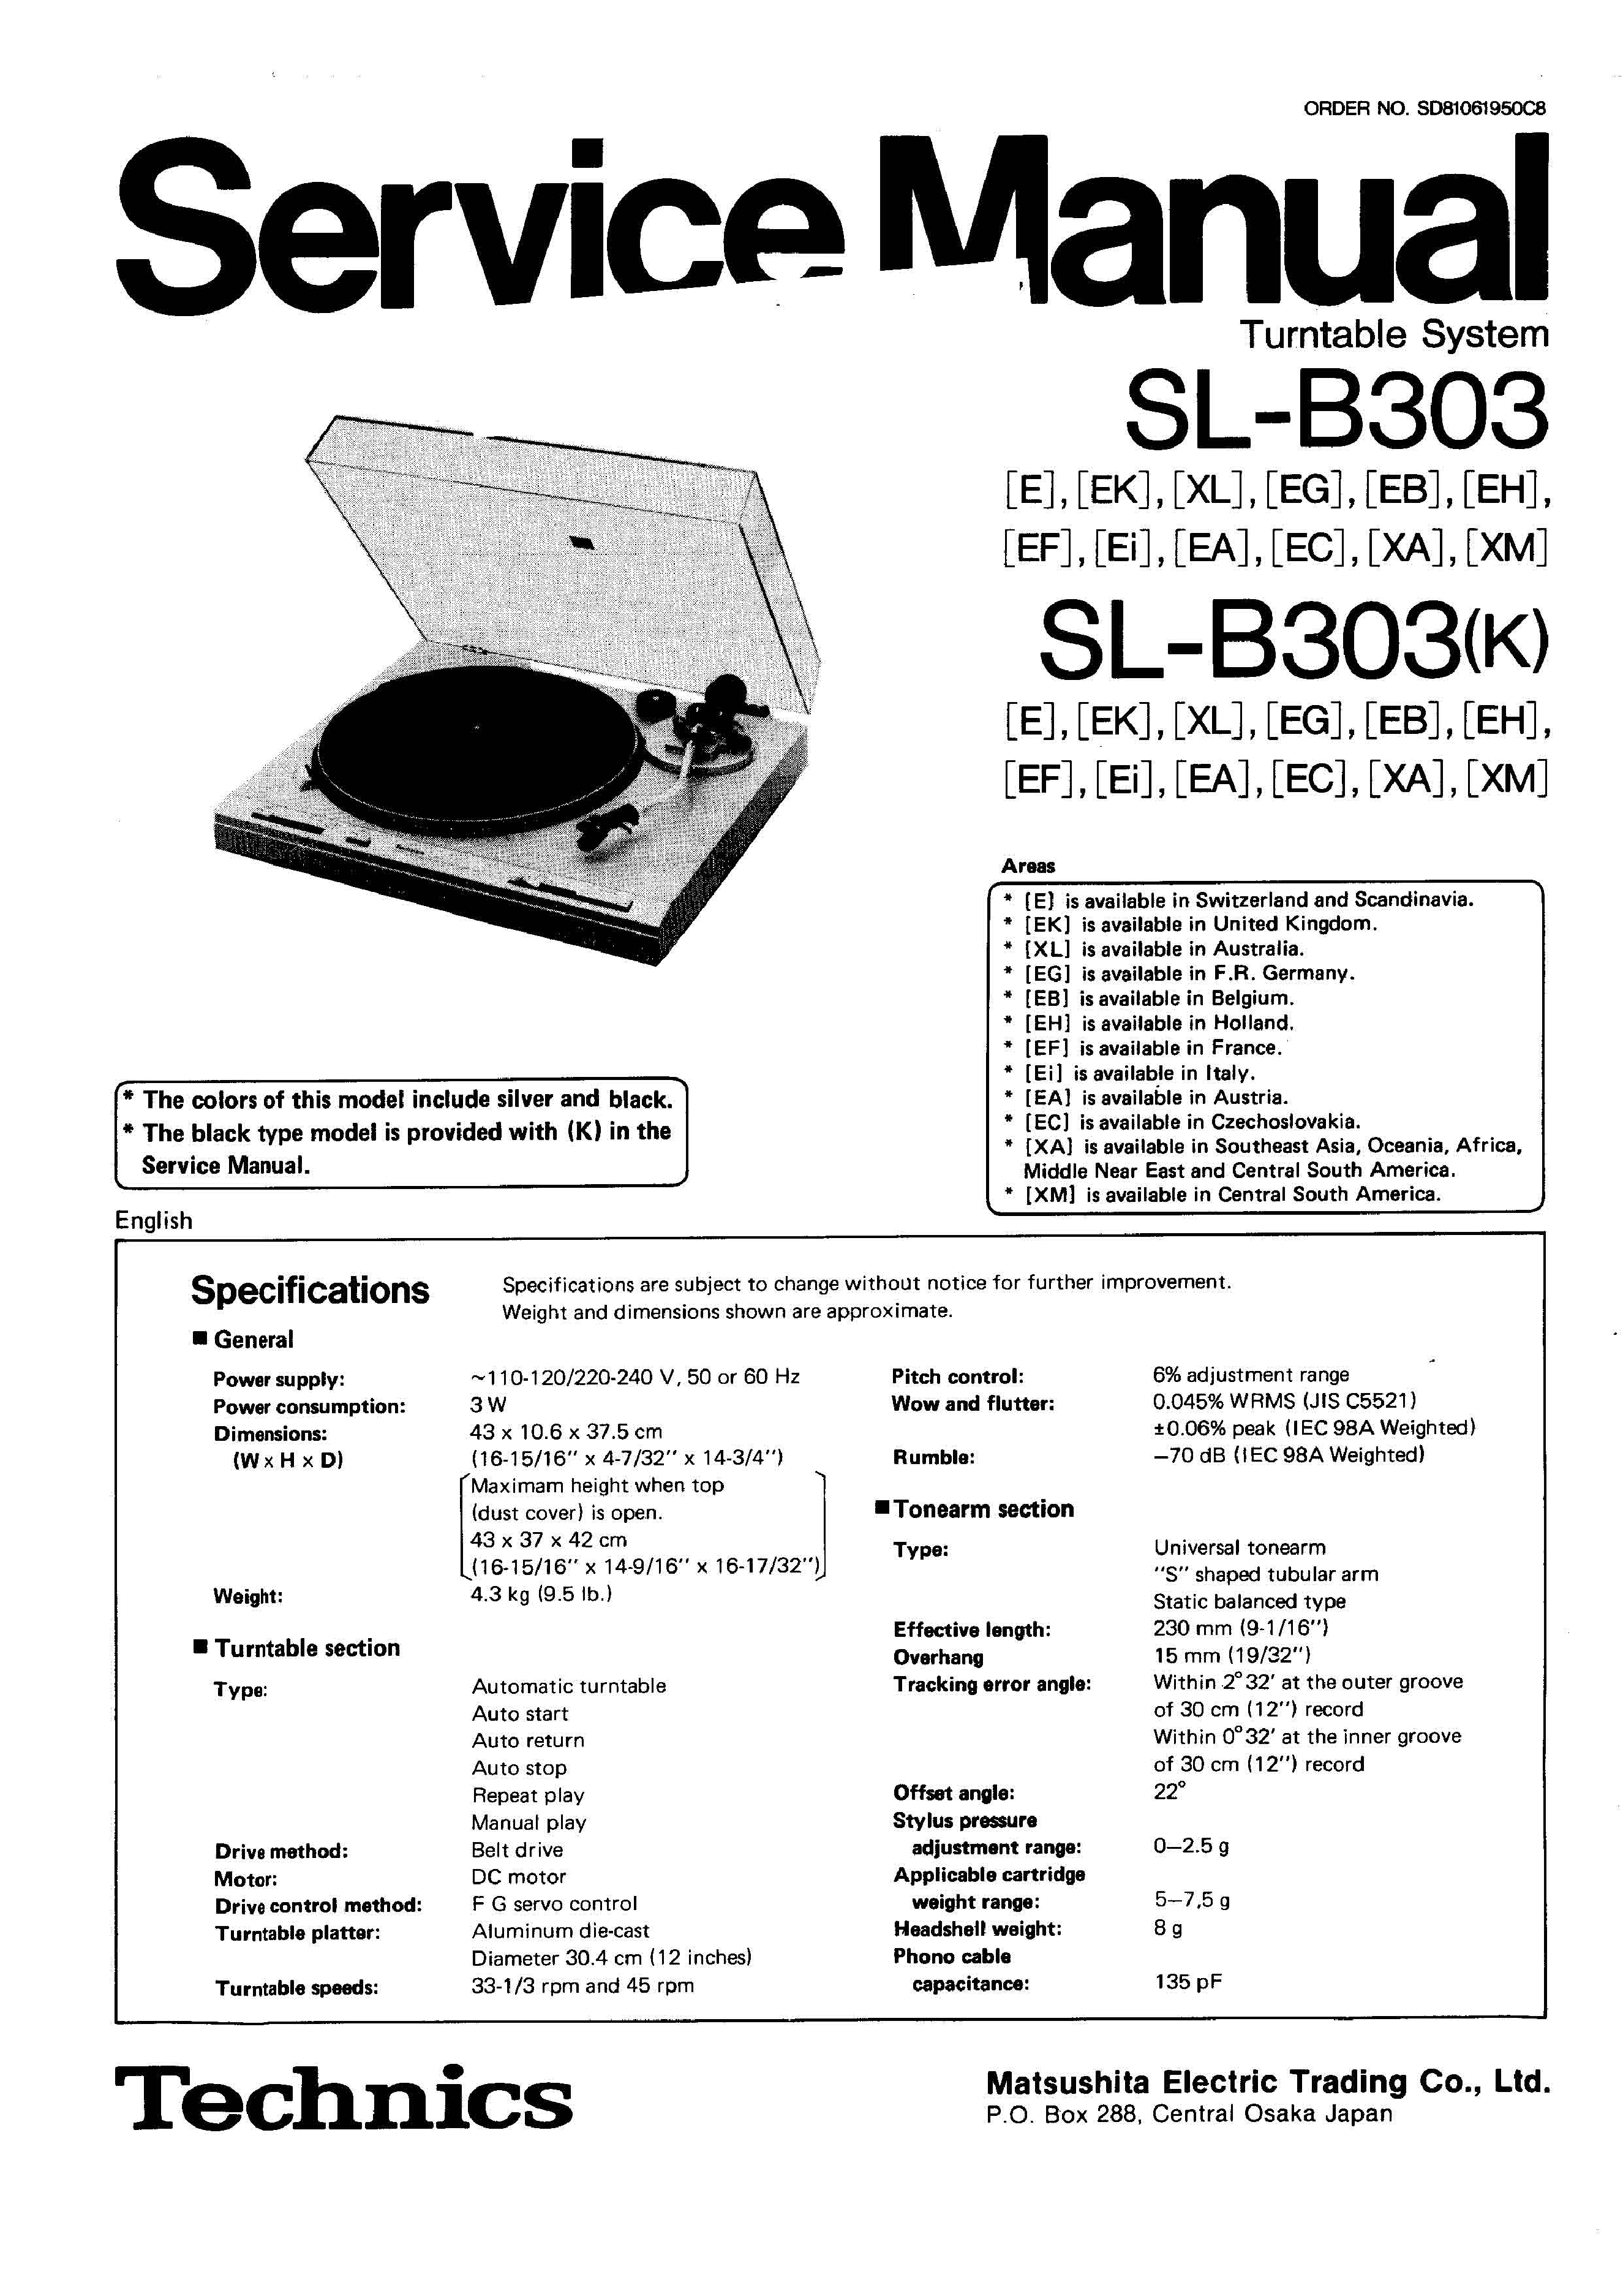 Technics Service Manual für SL-BL 3 englisch  Copy 